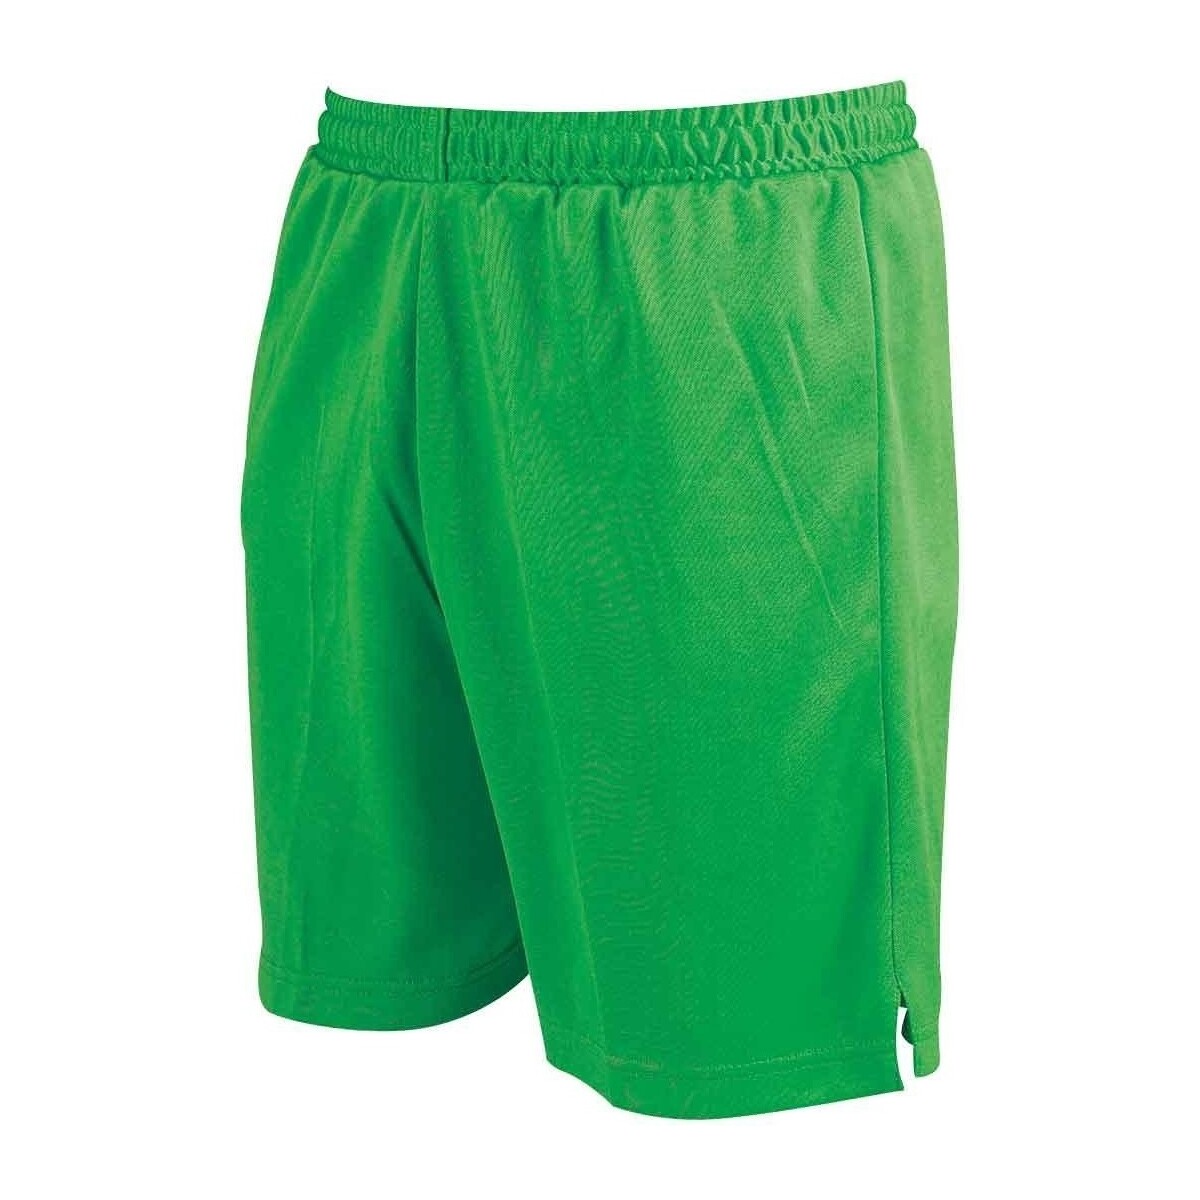 Vêtements Shorts / Bermudas Precision Attack Vert